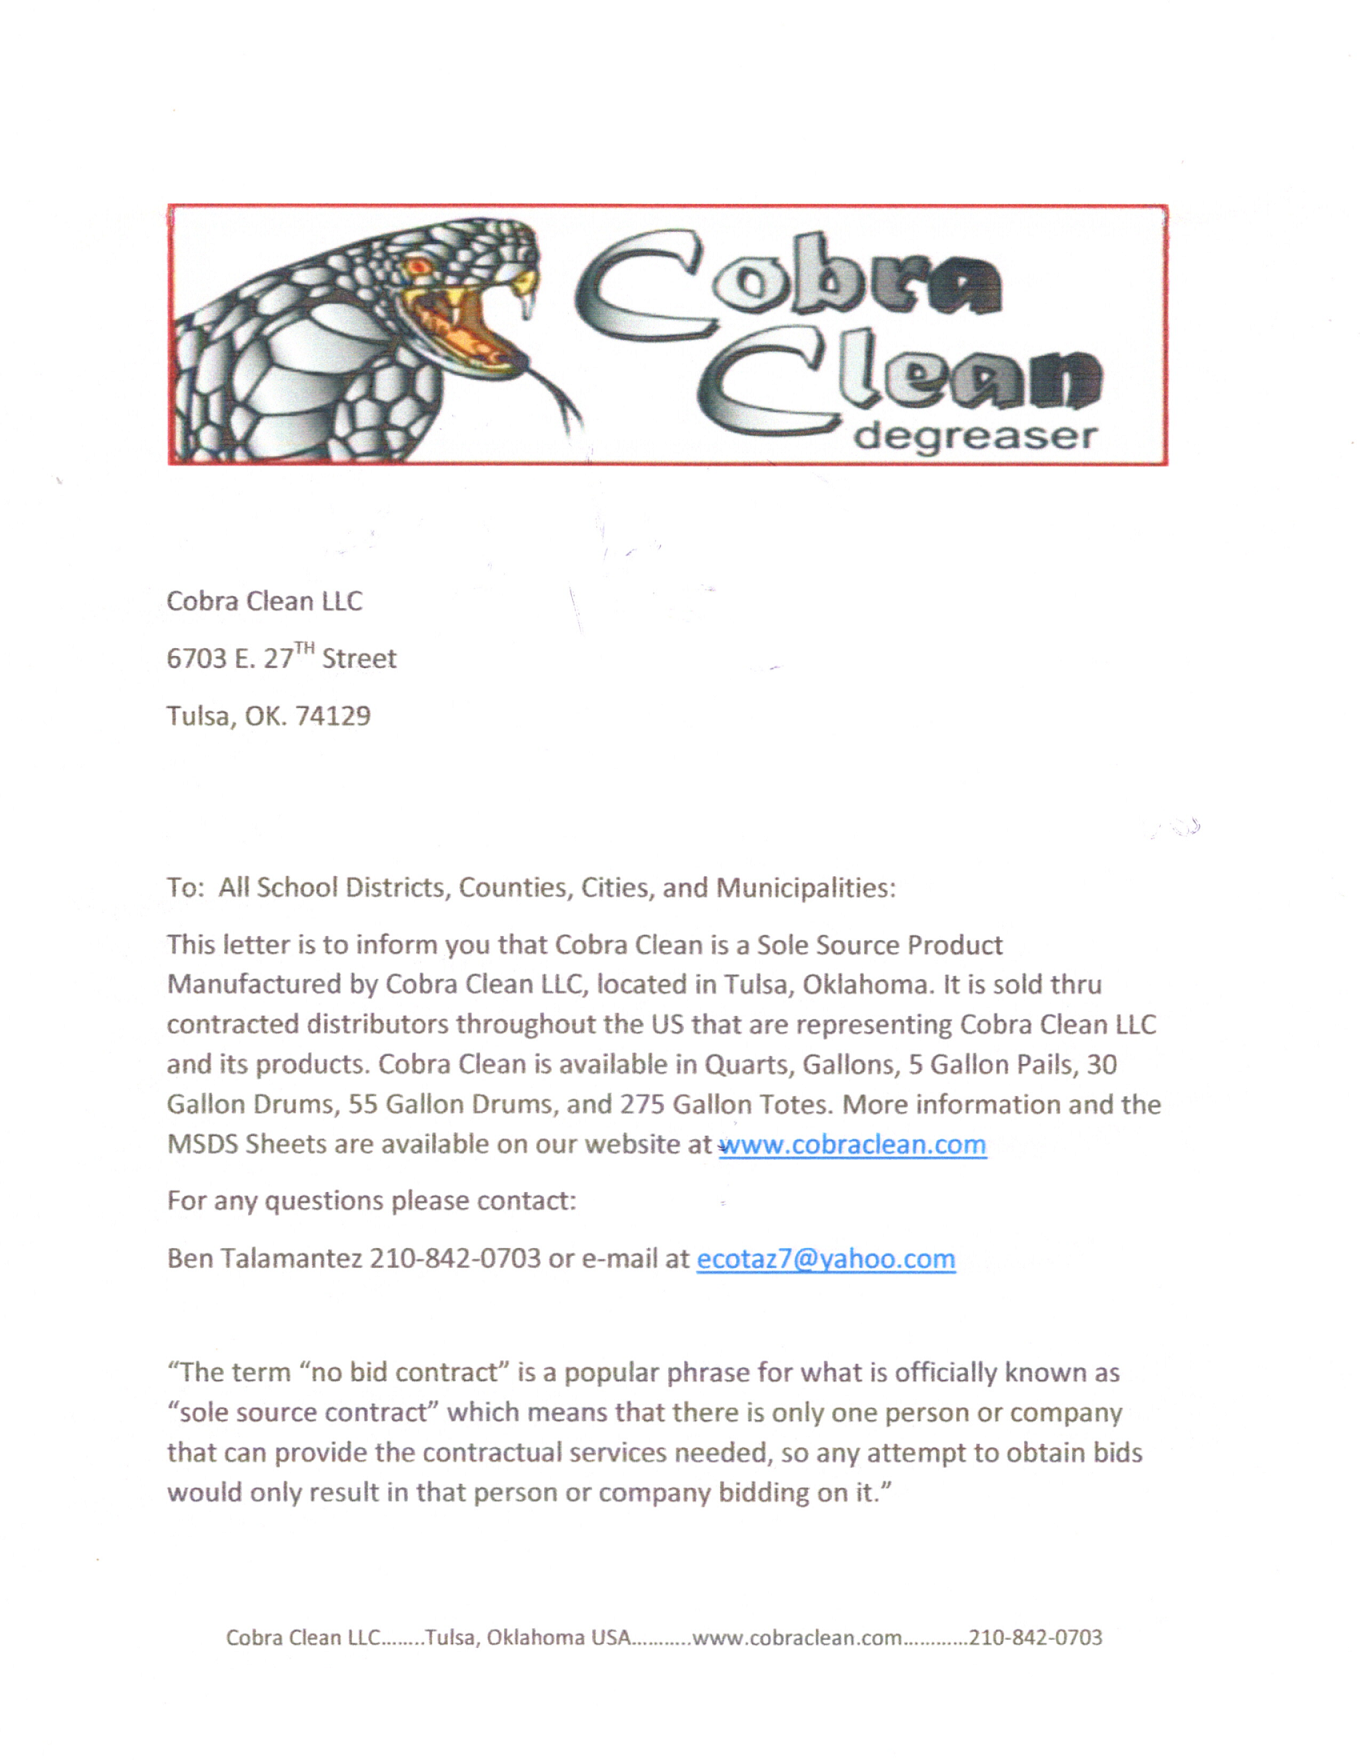 Cobra Clean Sole Source Letter